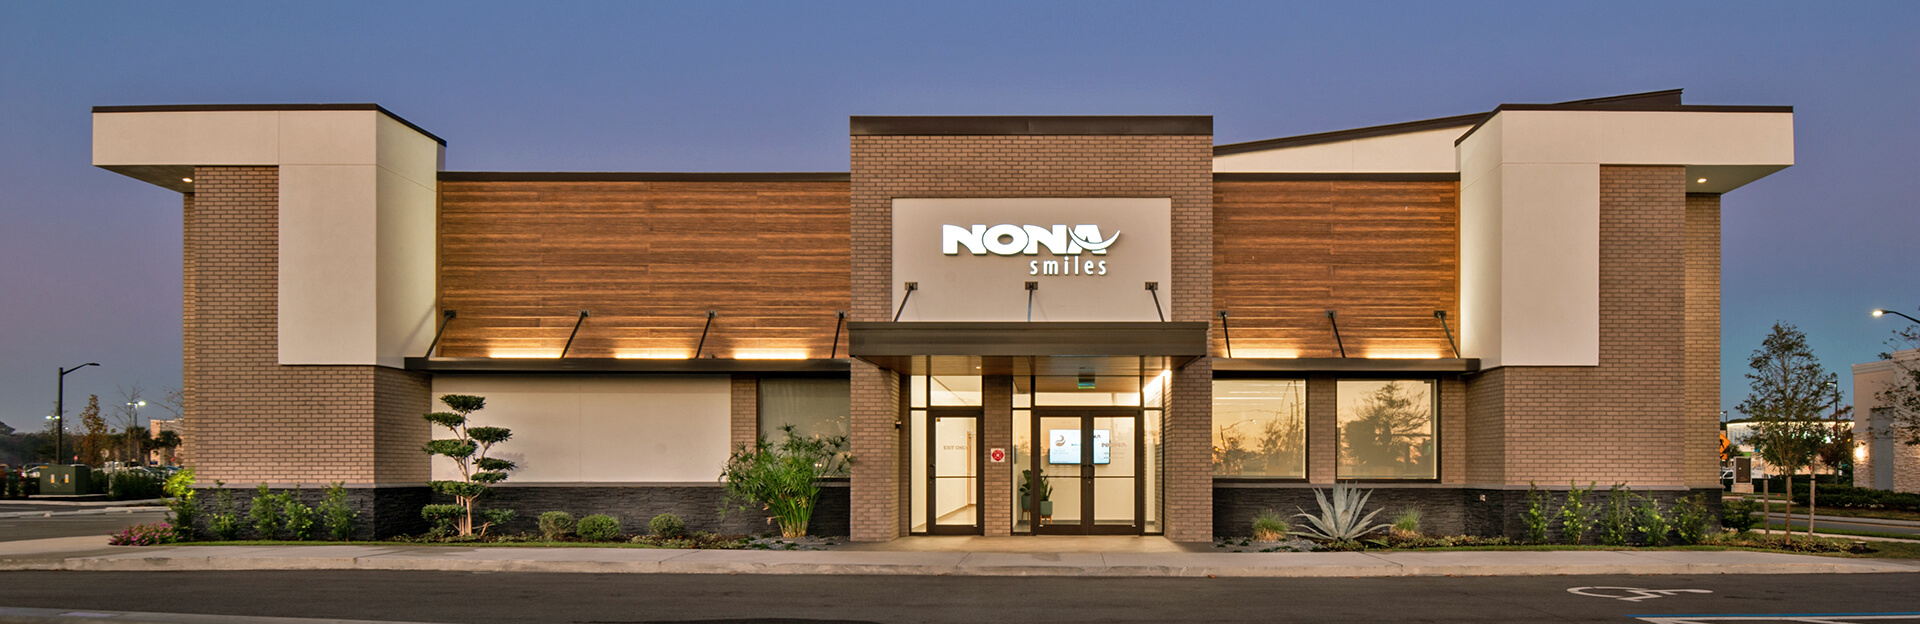 The Nona Smiles dental office building